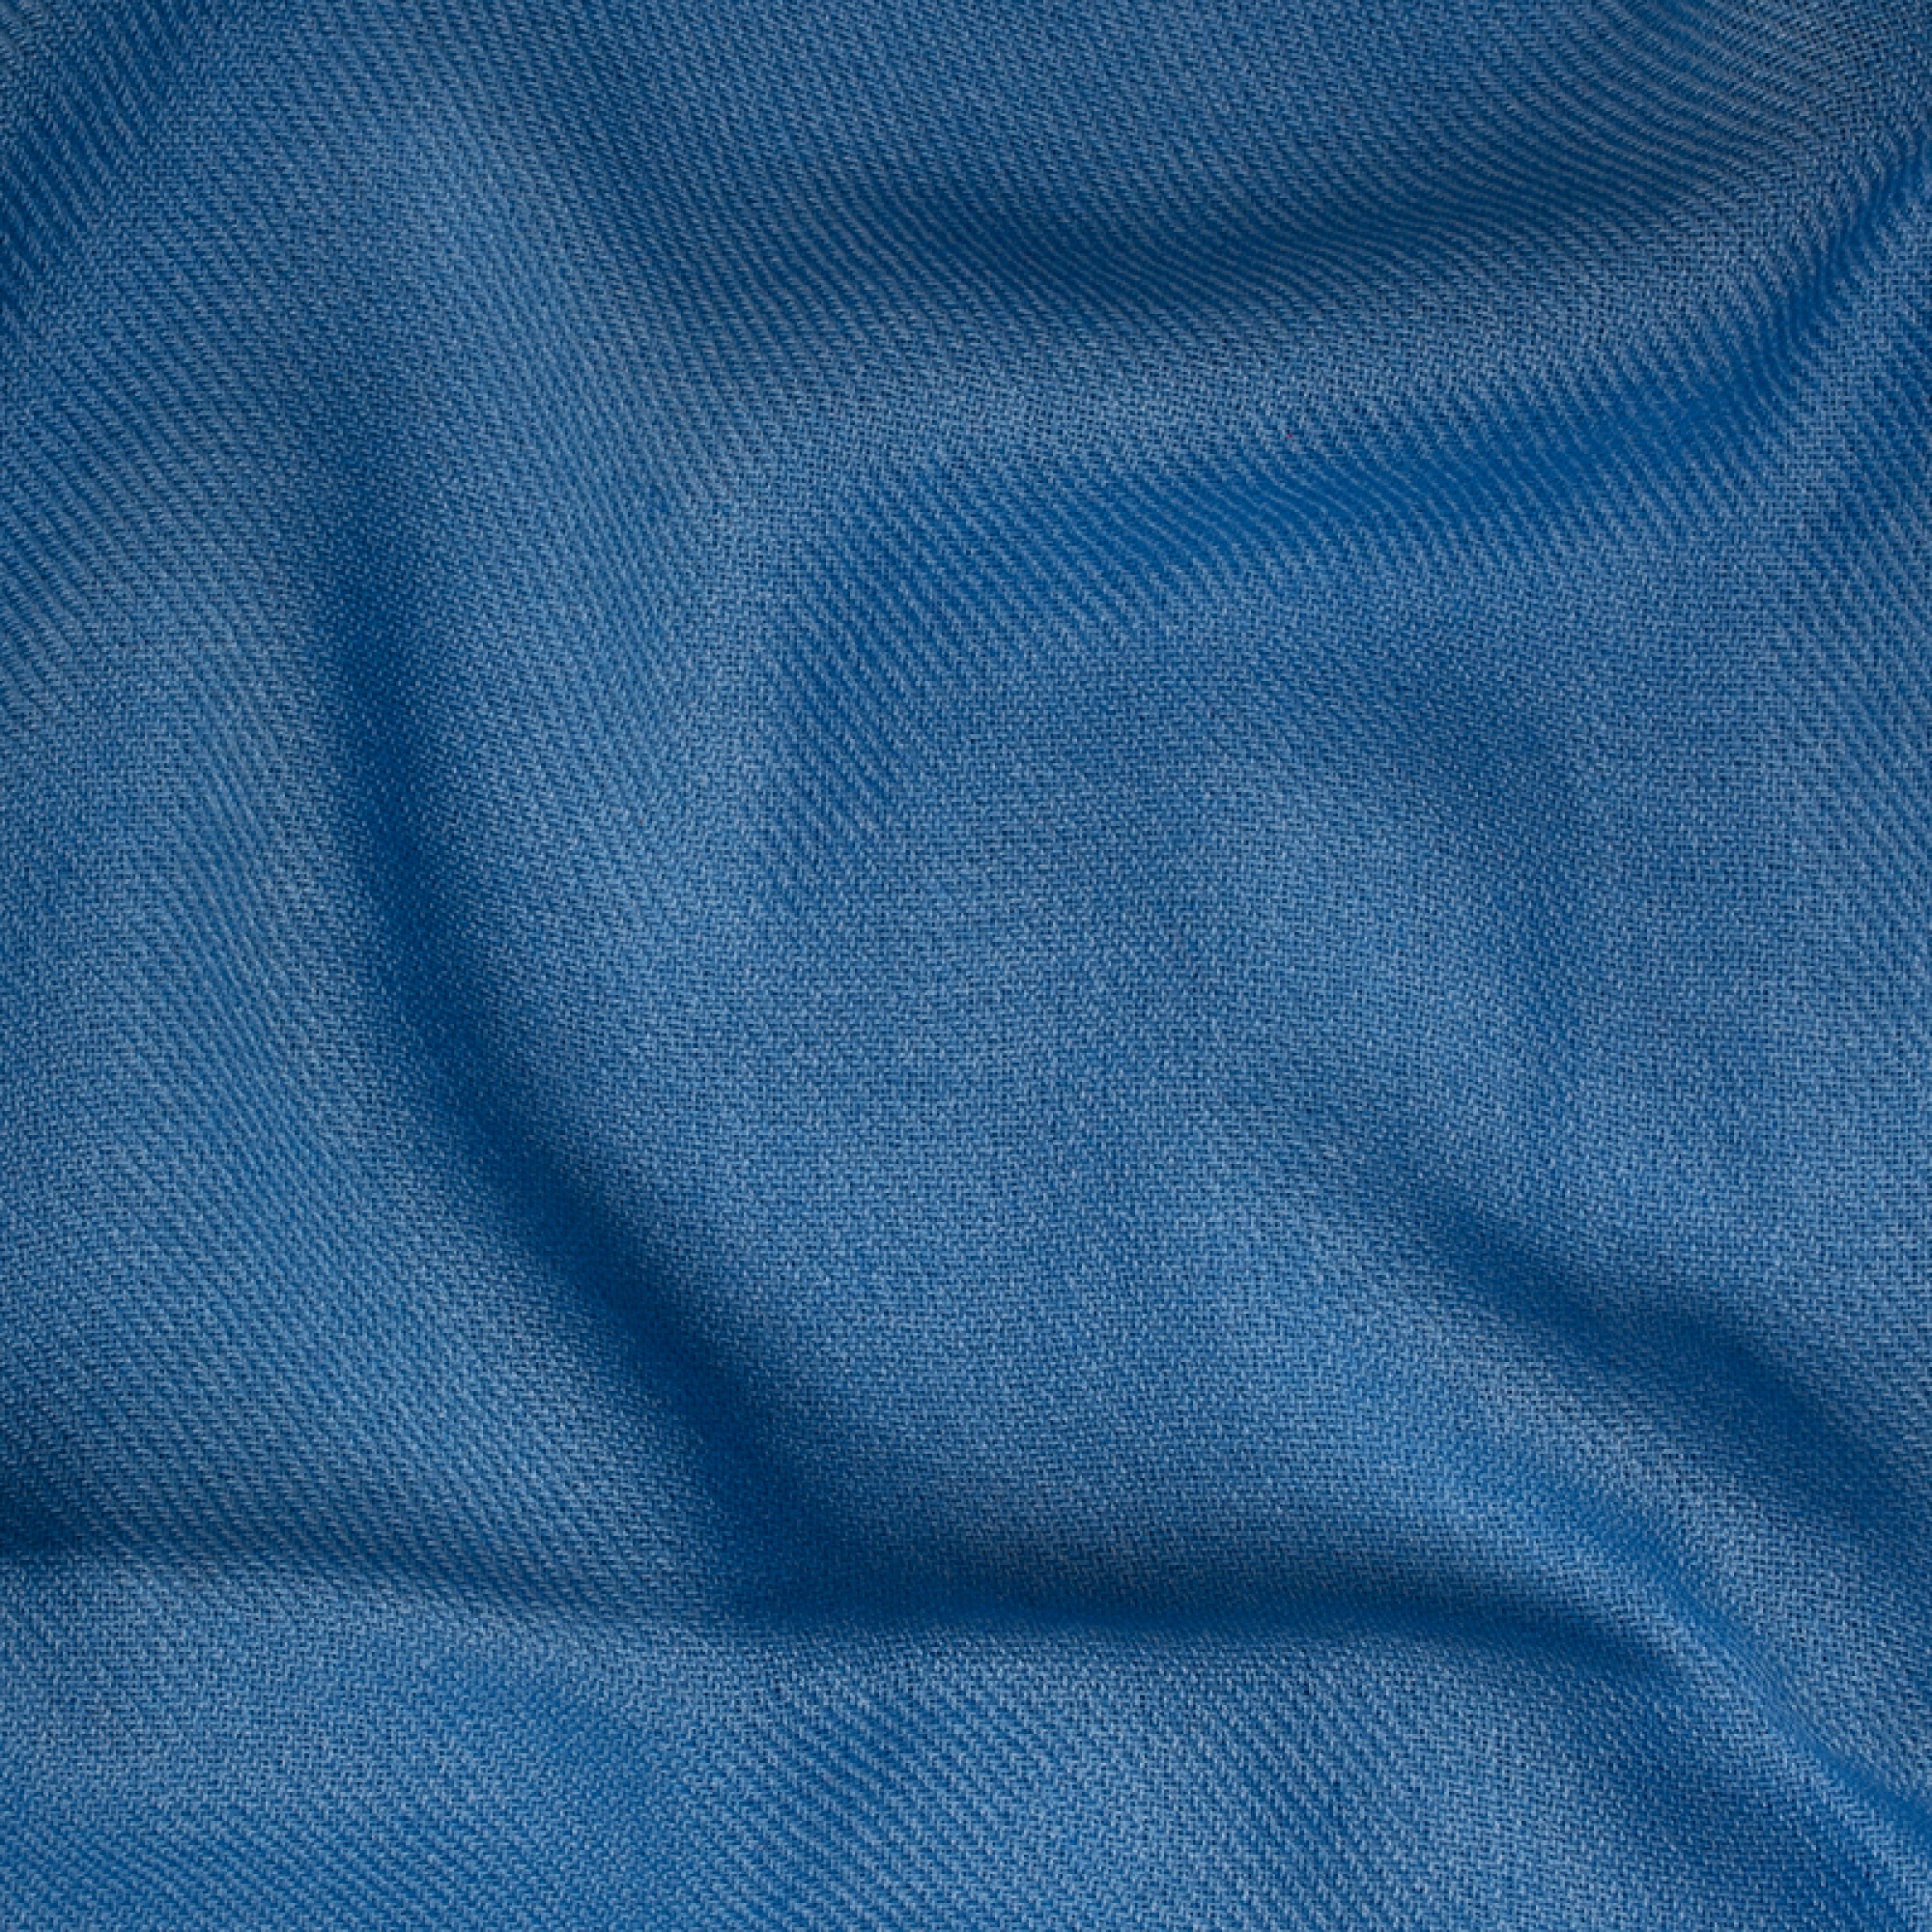 Cachemire pull homme toodoo plain m 180 x 220 bleu miro 180 x 220 cm